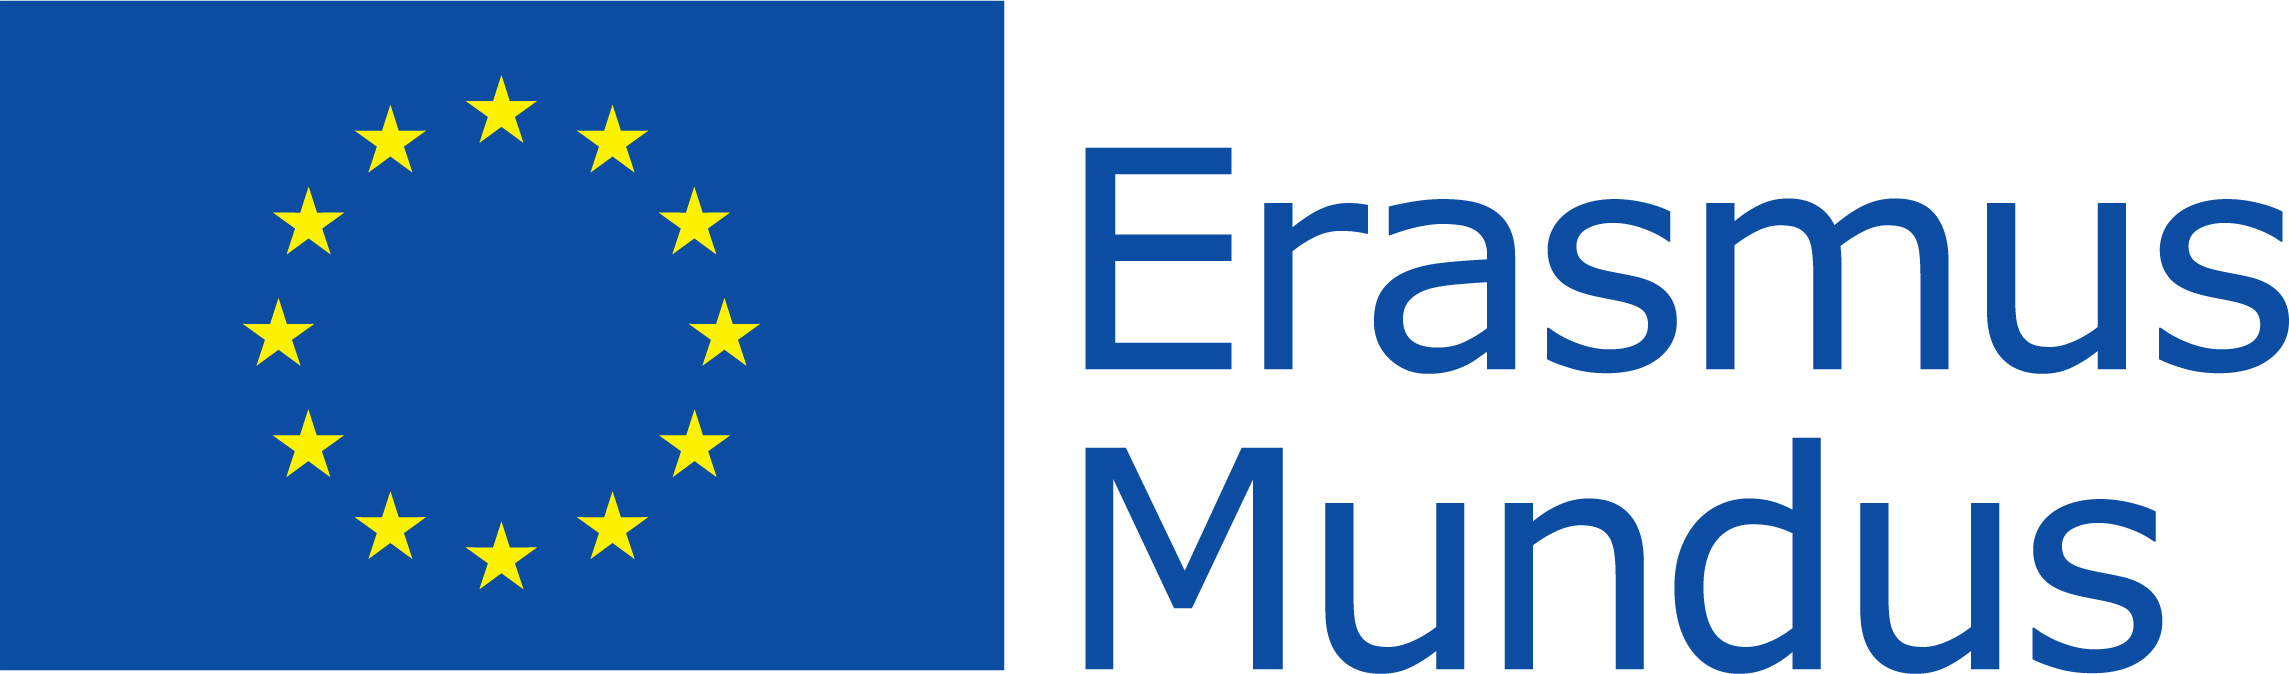 Euroculture Erasmus Mundus Student Master Scholarships.